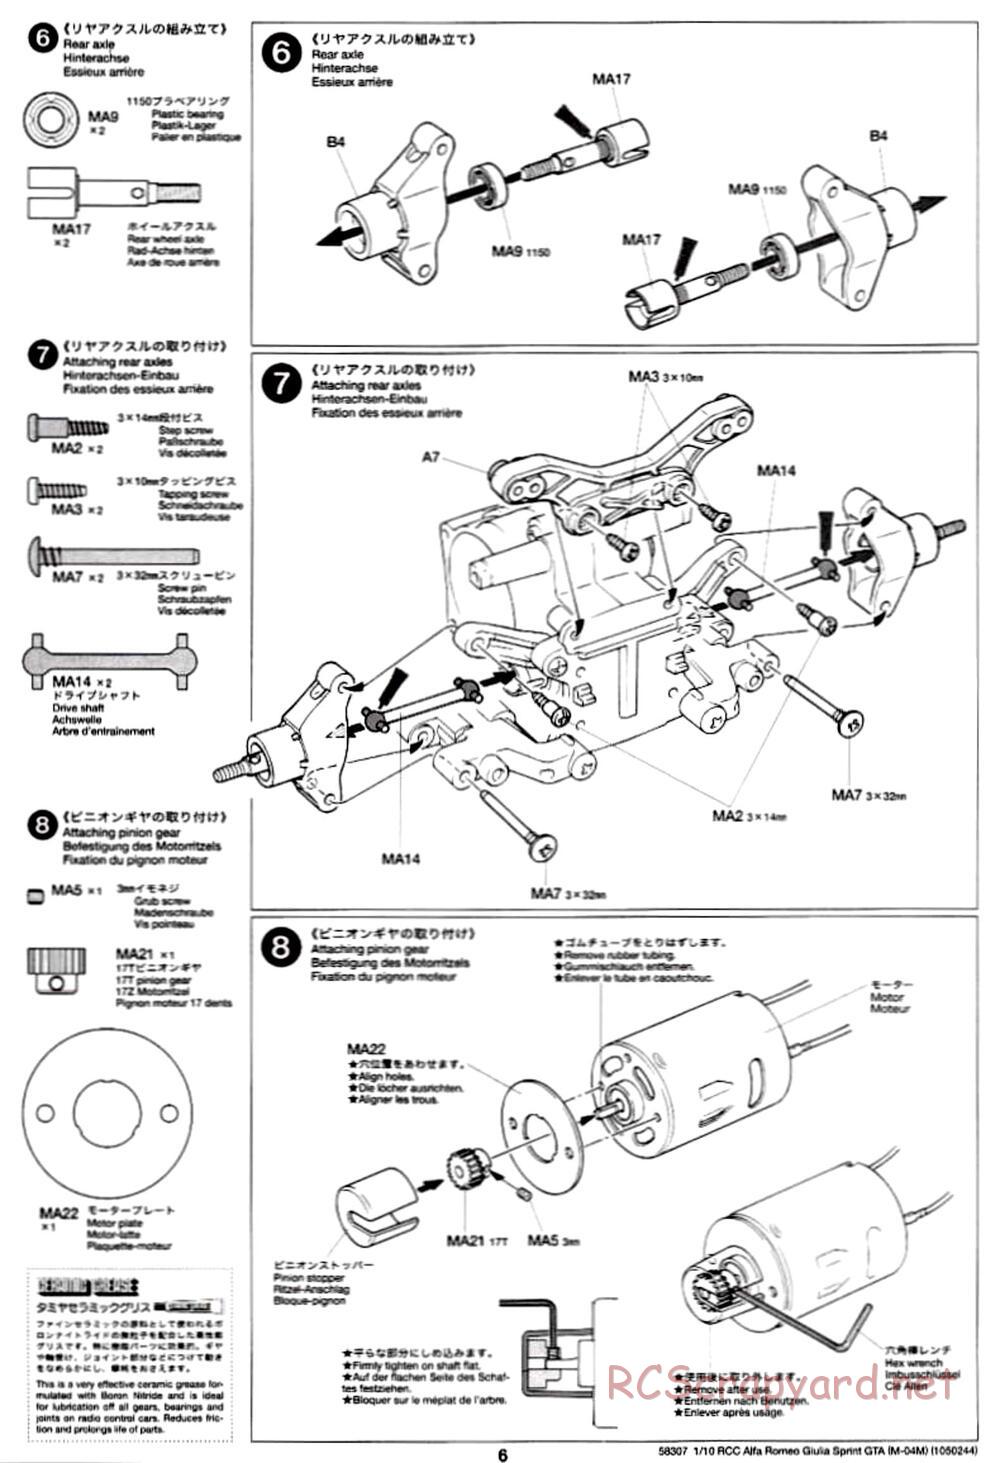 Tamiya - Alfa Romeo Giulia Sprint GTA - M04M Chassis - Manual - Page 6